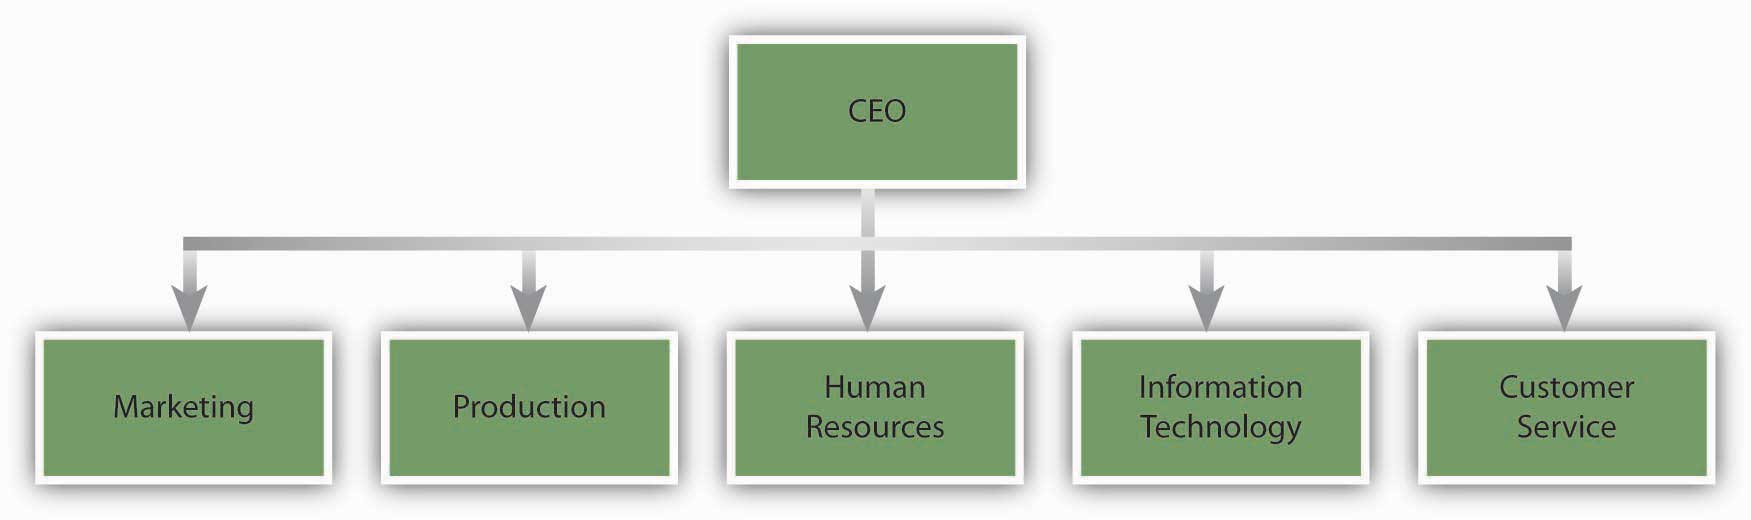 organizational structure of mcdonald corporation